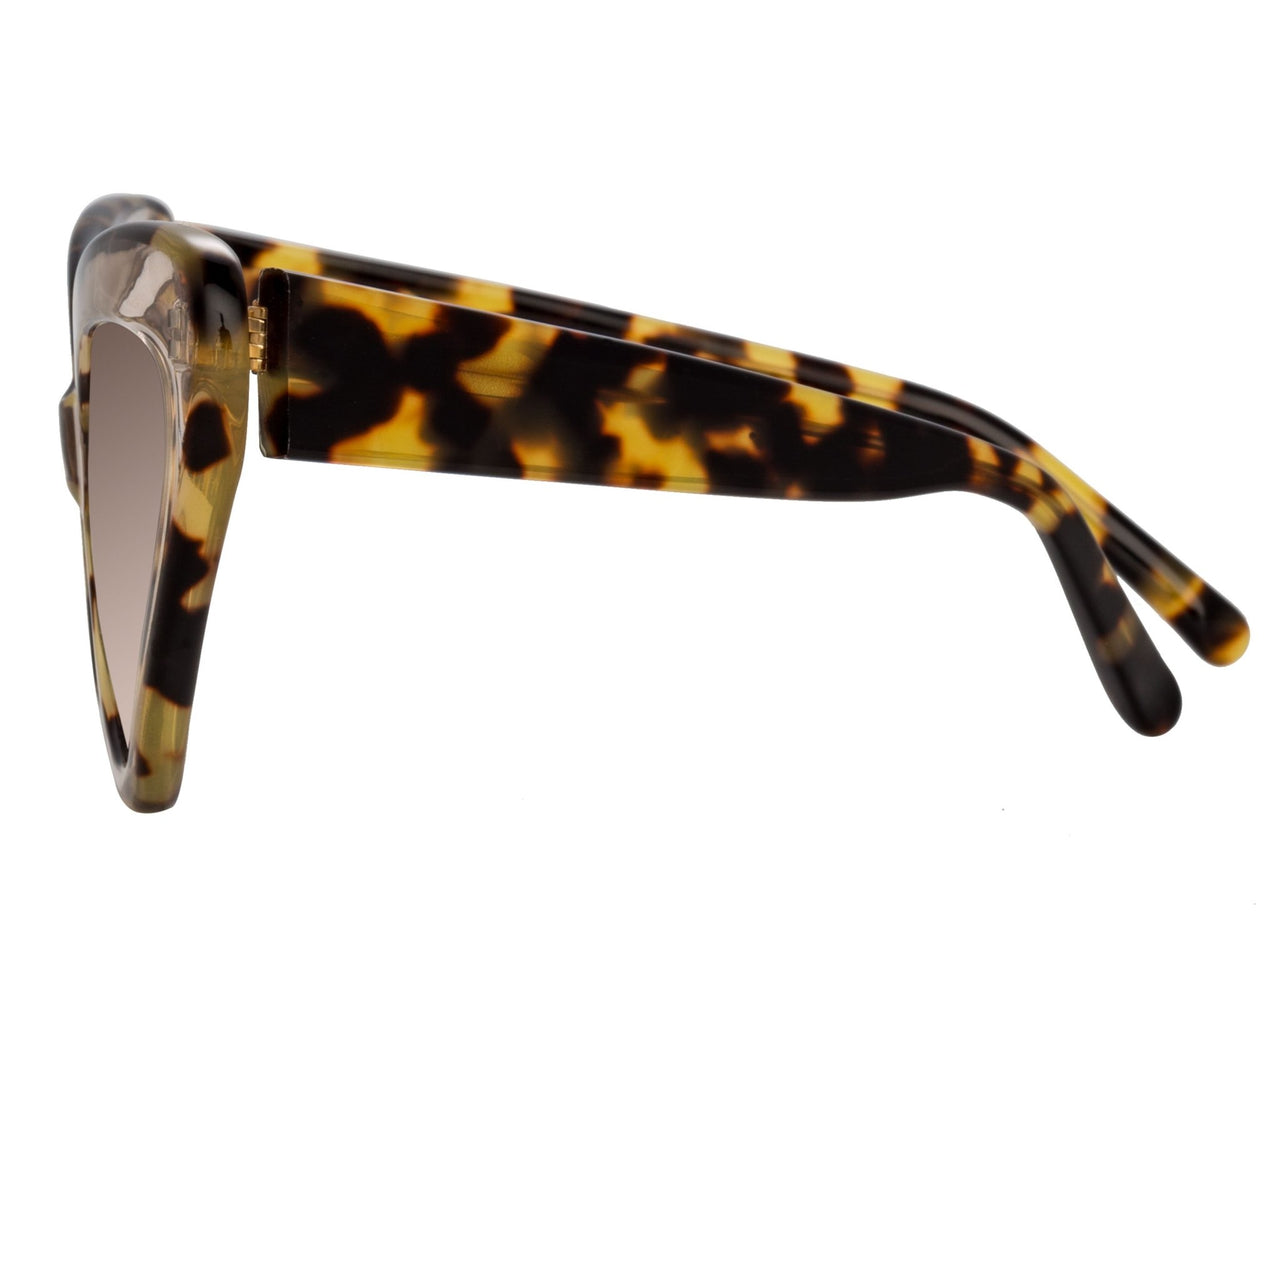 Erdem Women Sunglasses Cat Eye Clear Tortoiseshell With Brown Graduated Lenses - EDM29C1SUN - Watches & Crystals